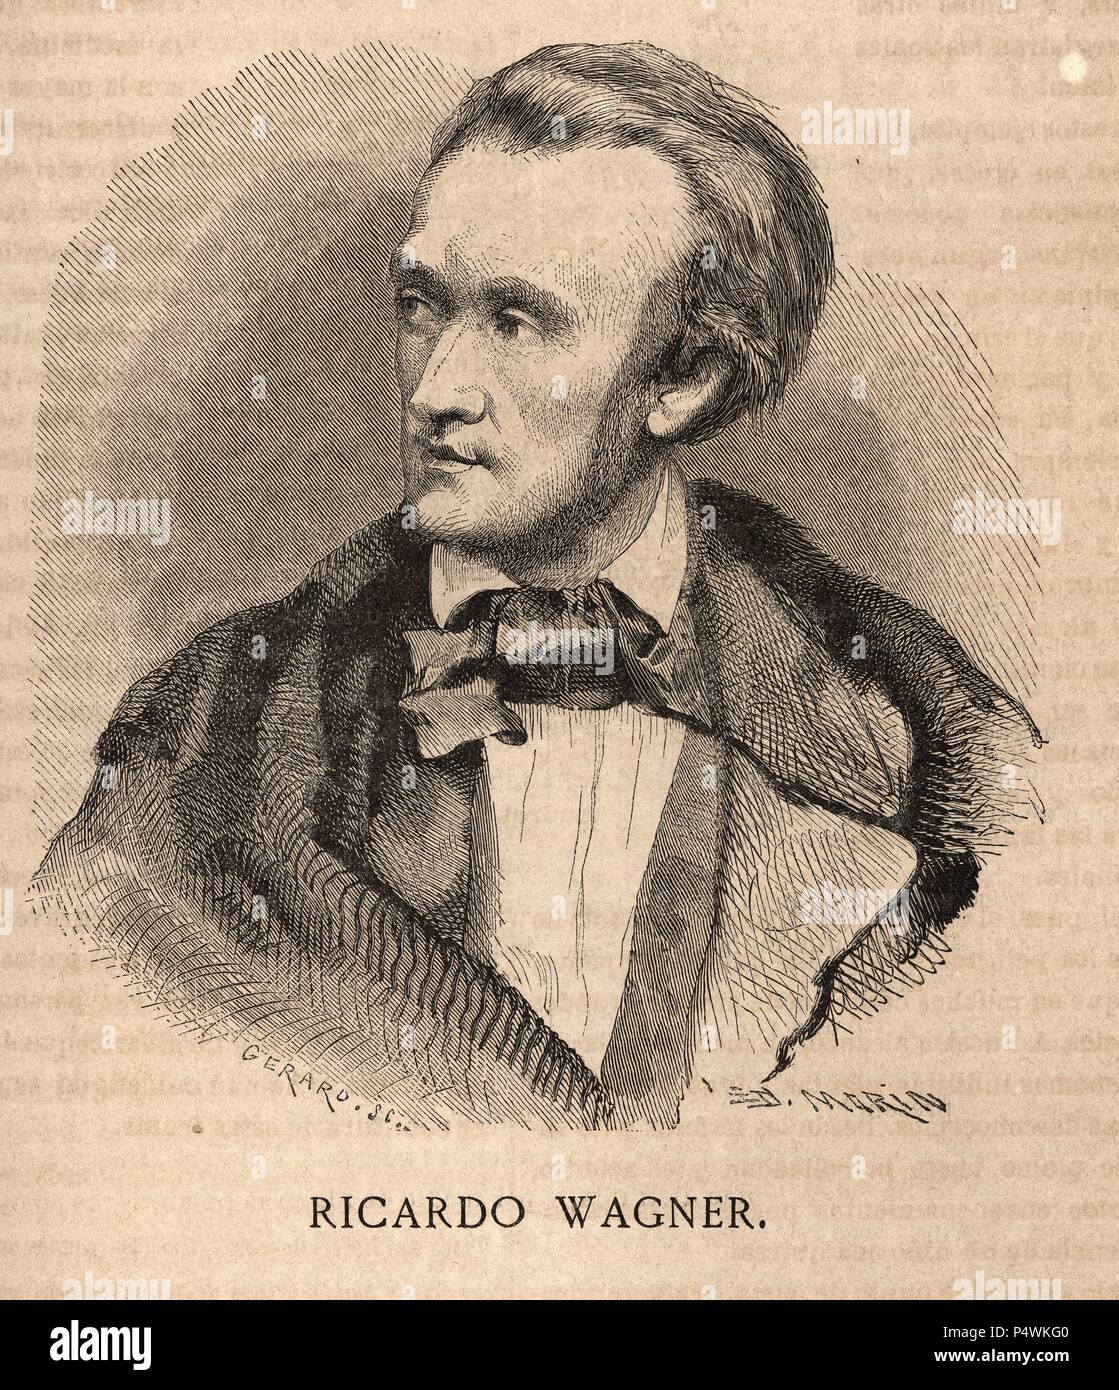 Richard Wagner (Leipzig, 1813-Venecia, 1883) Compositor de óperas alemán: Rienzi, El Holandés errante, Tannhäuser. Grabado de 1900. Stock Photo